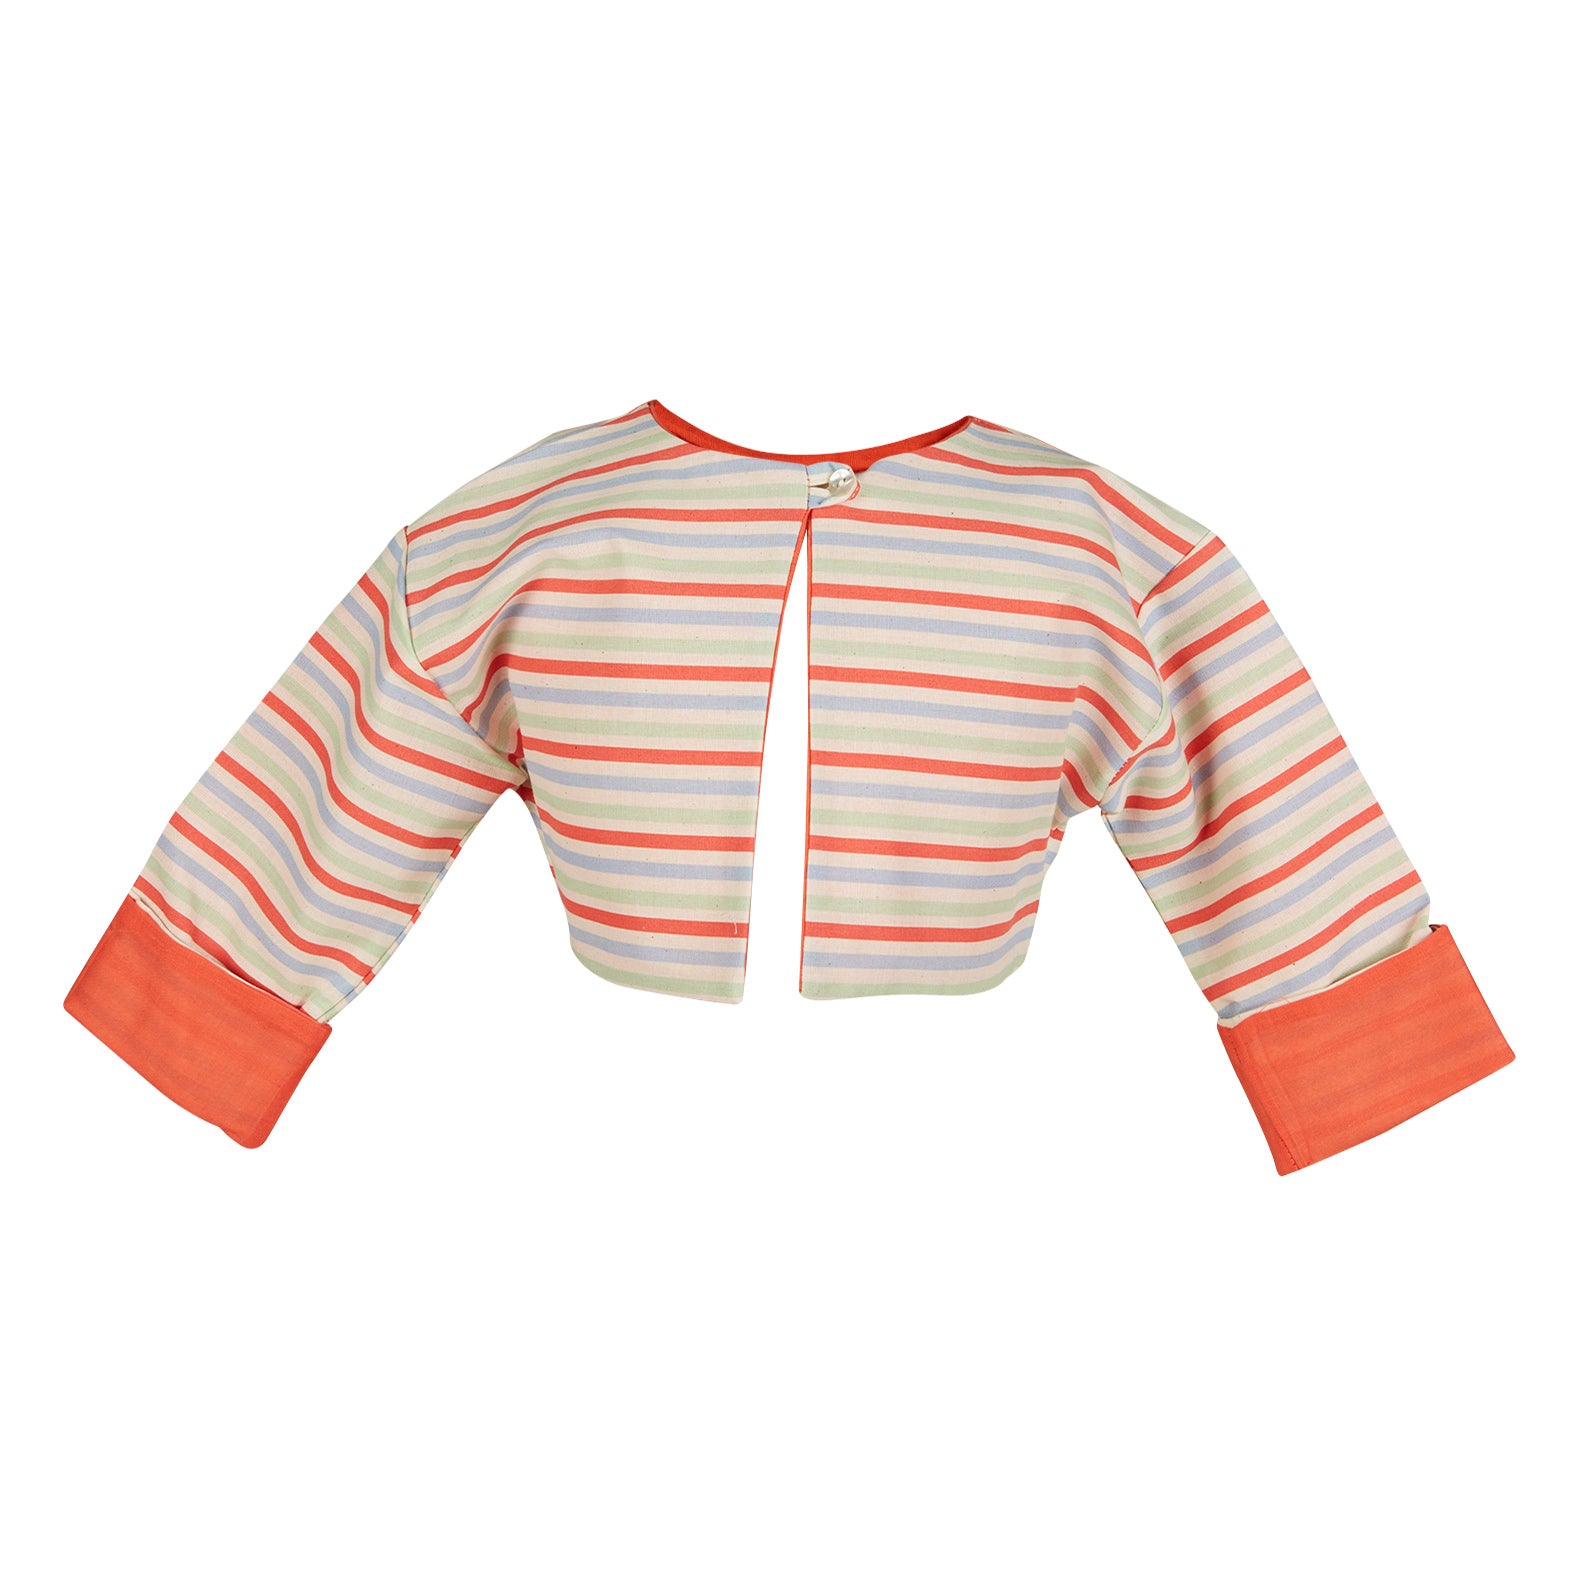 Archive Children's Bolero Jacket - Primary stripe reversible